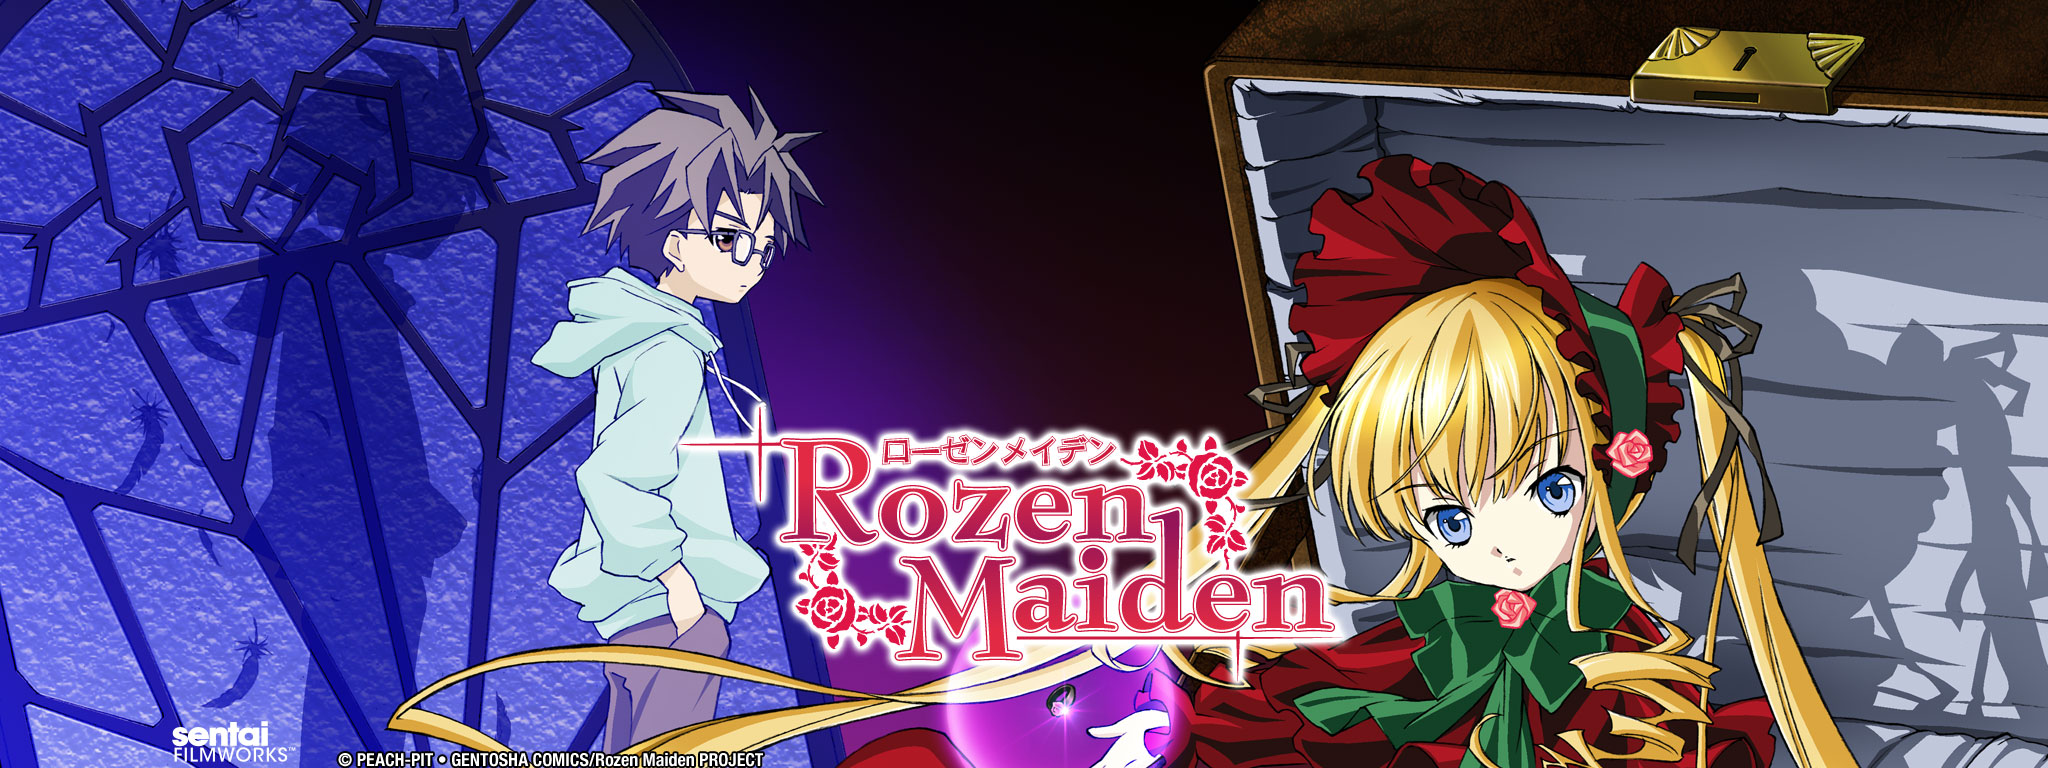 Title Art for Rozen Maiden